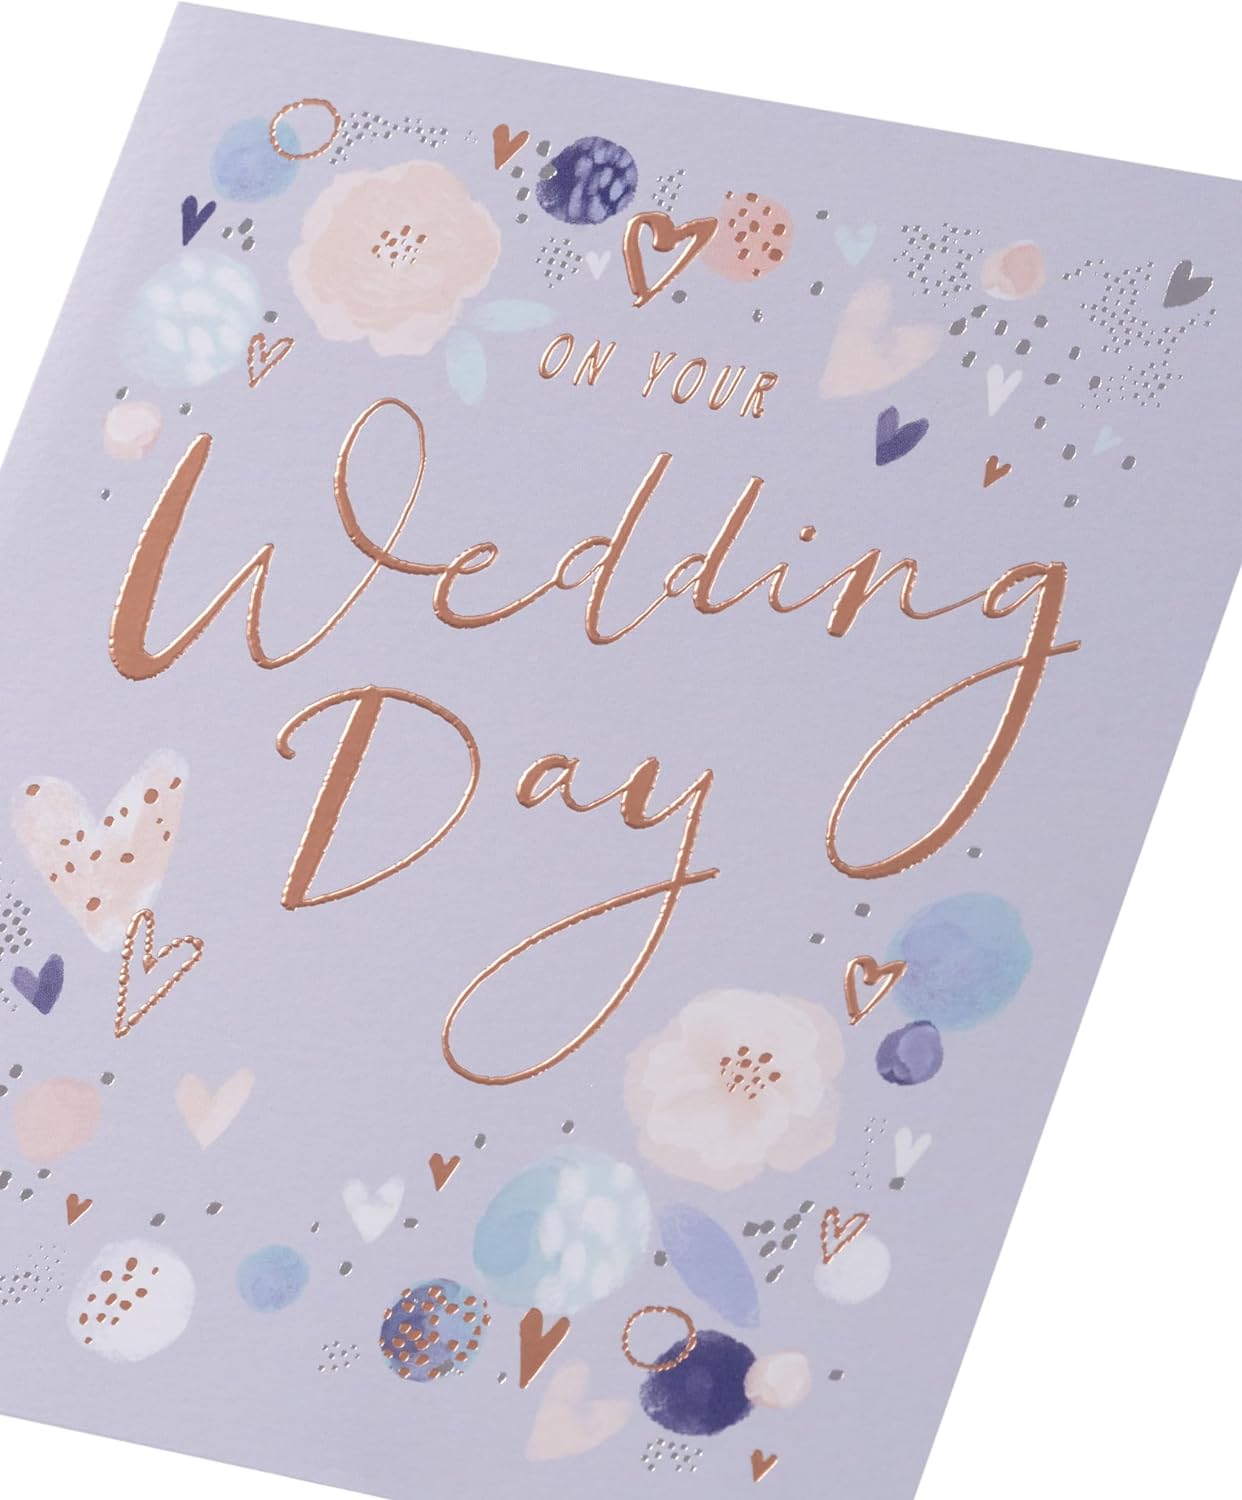 Light Design Wedding Day Congratulations Card